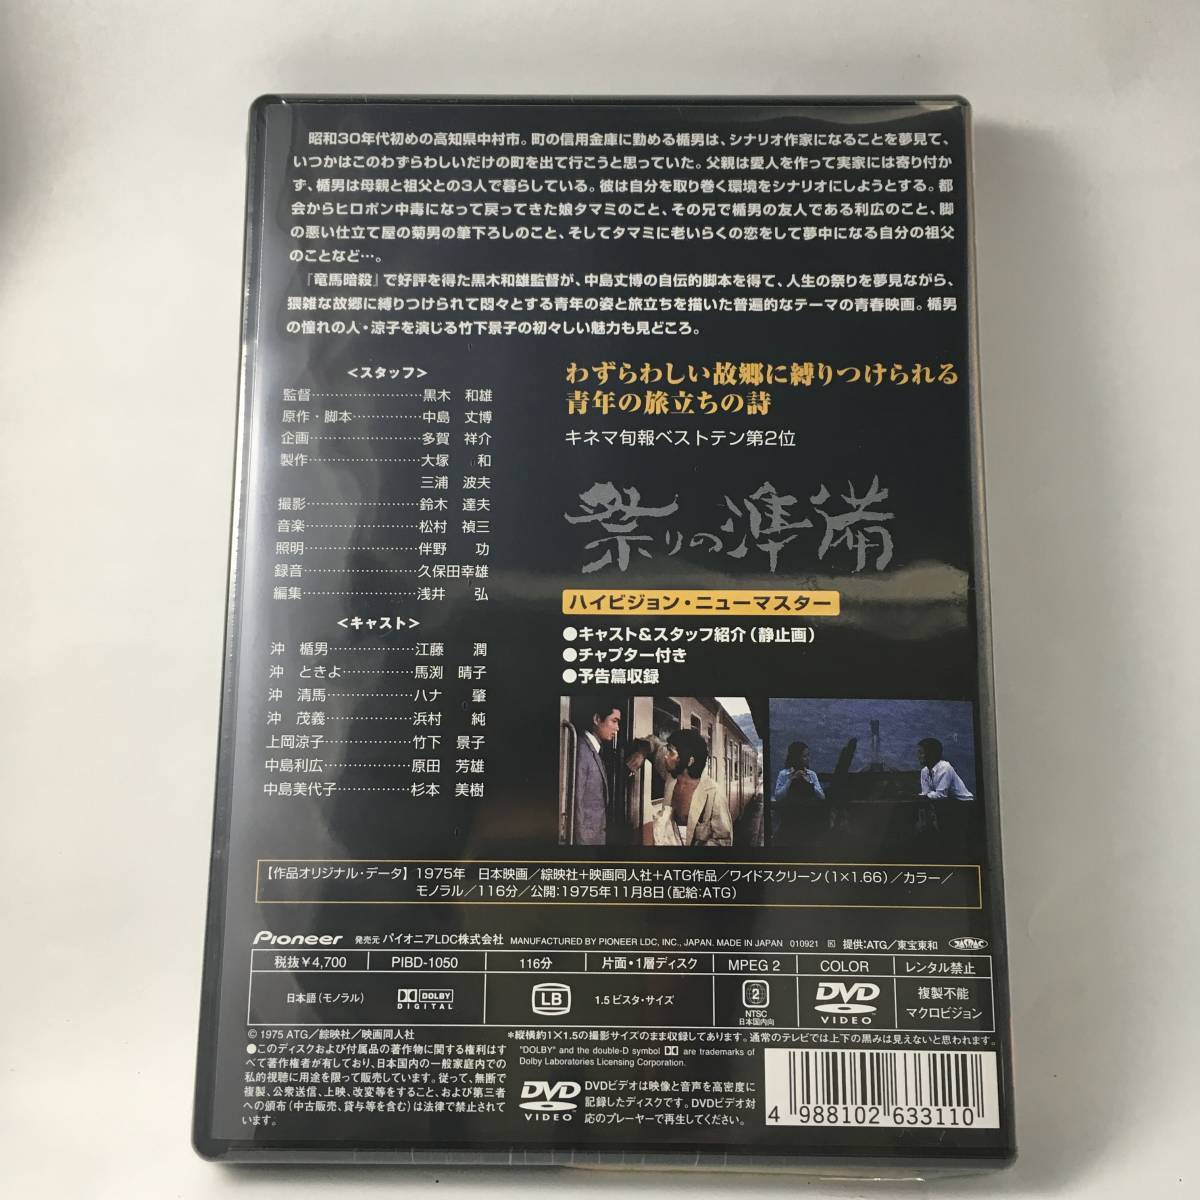 p9 祭りの準備 DVD(DVD)｜売買されたオークション情報、yahooの商品 